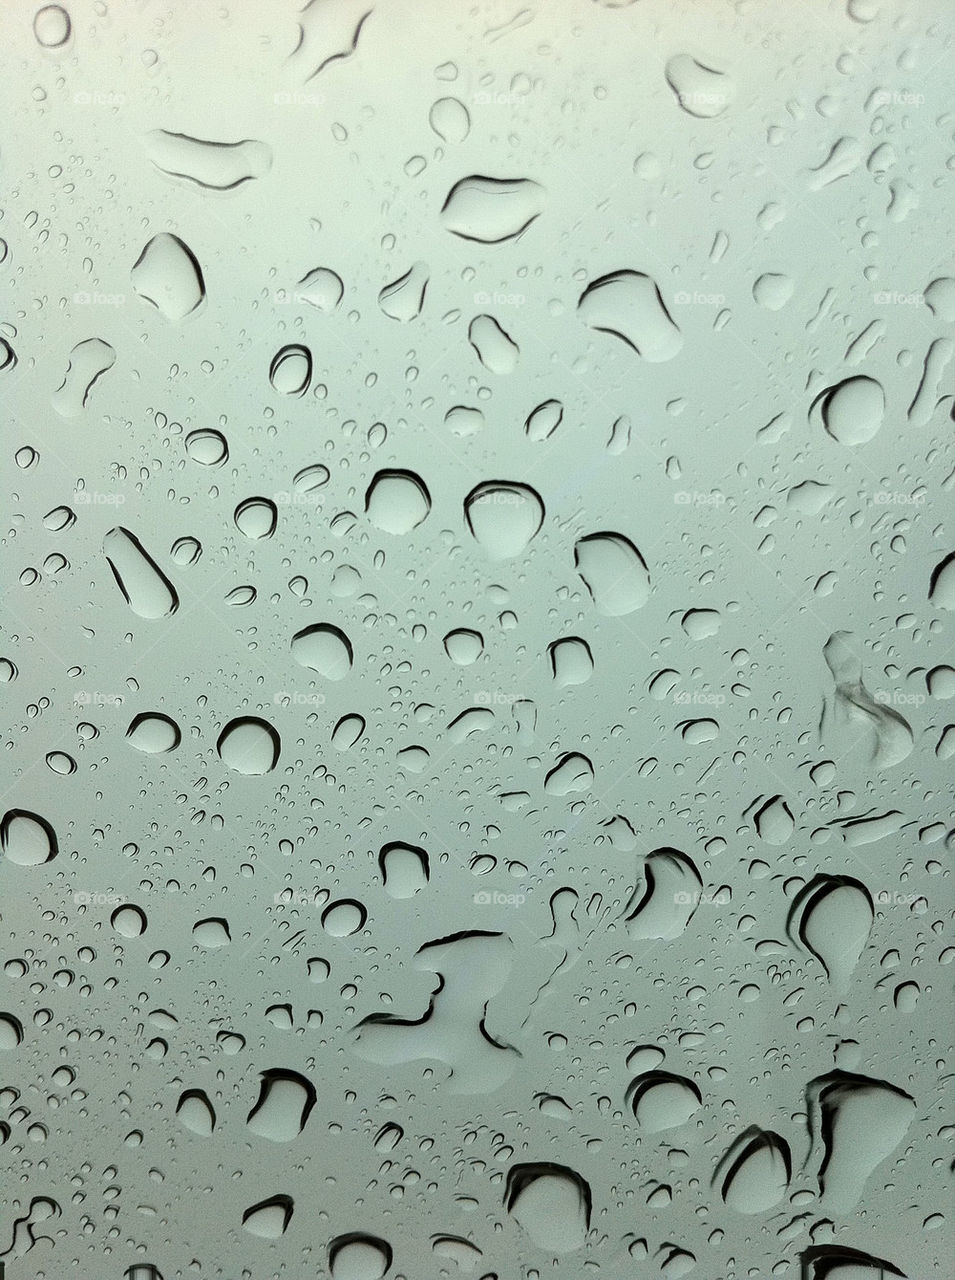 water window raindrops drip by tplips01